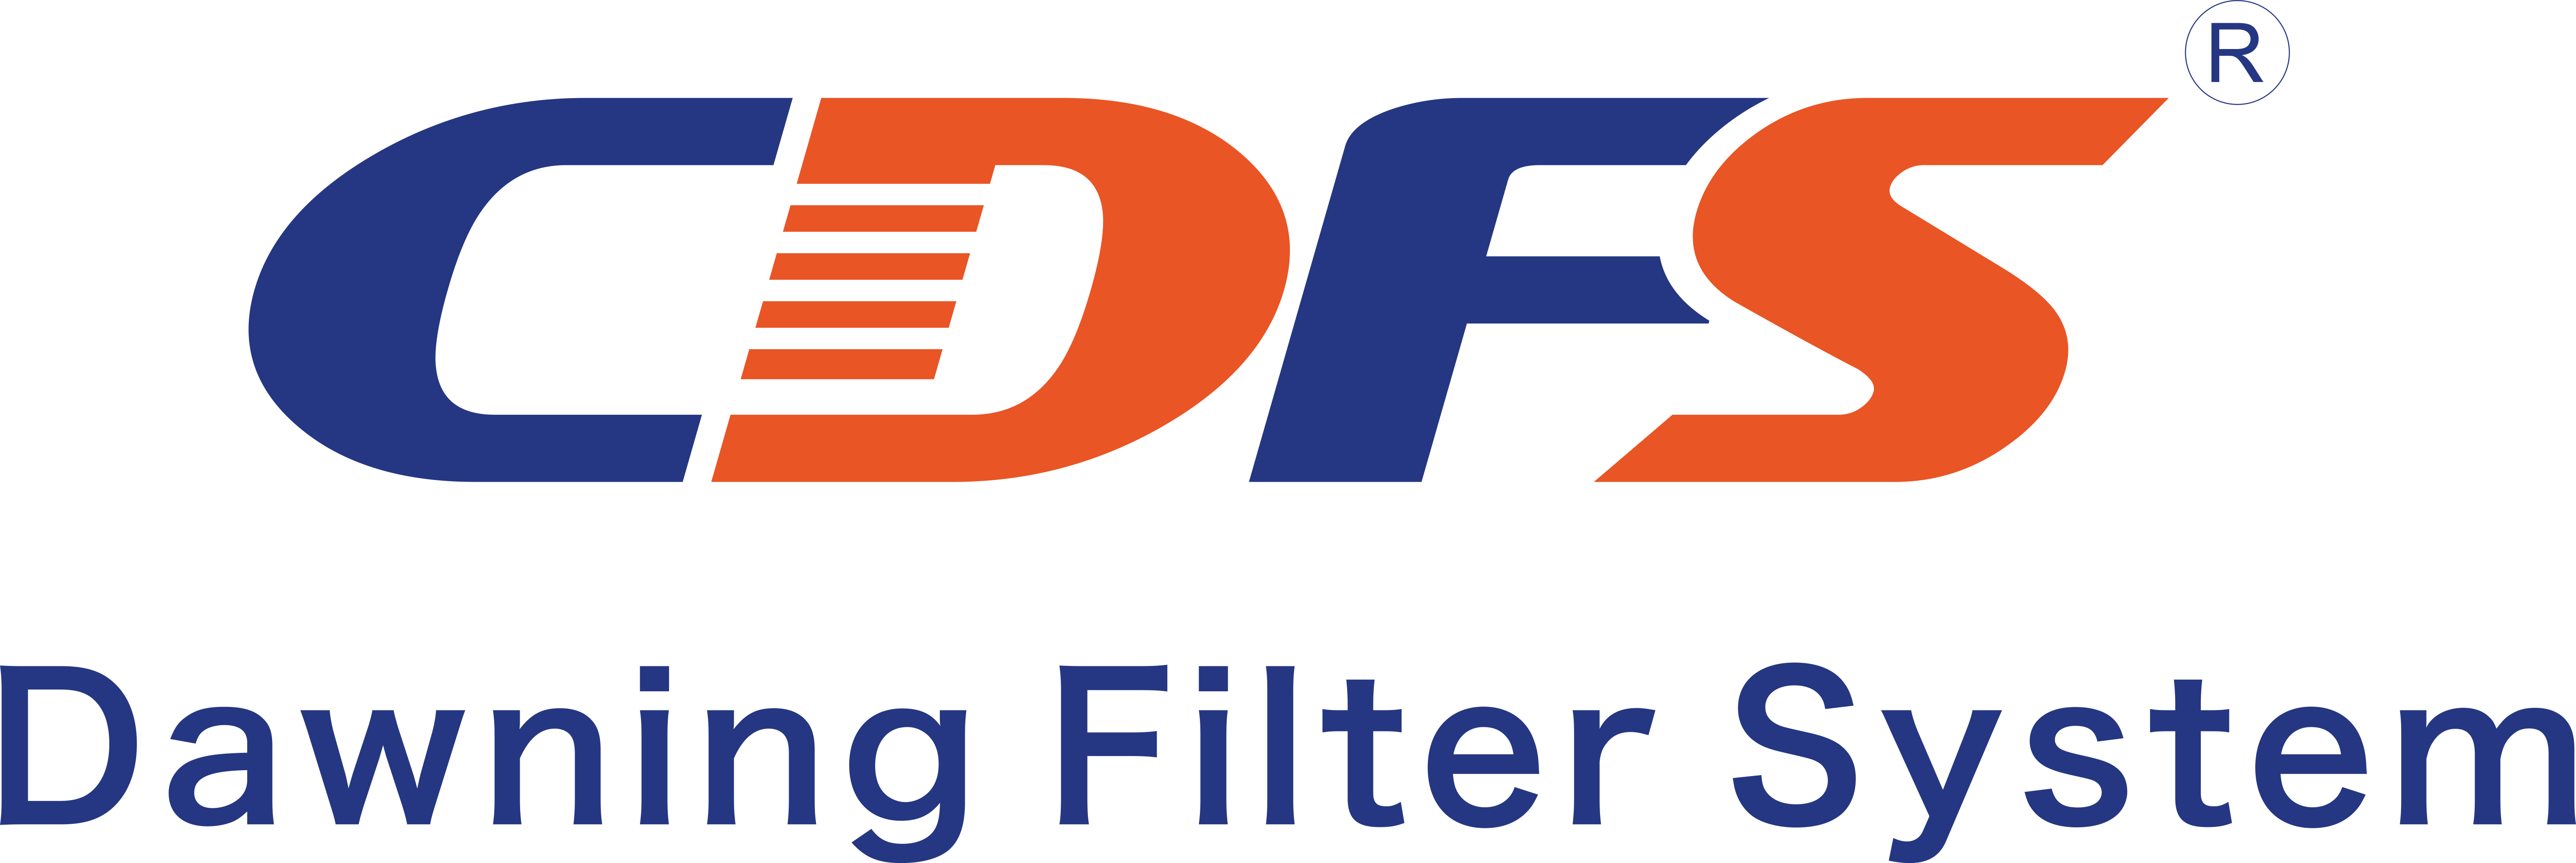 Hunan Dawning Filter System Technology Co., Ltd